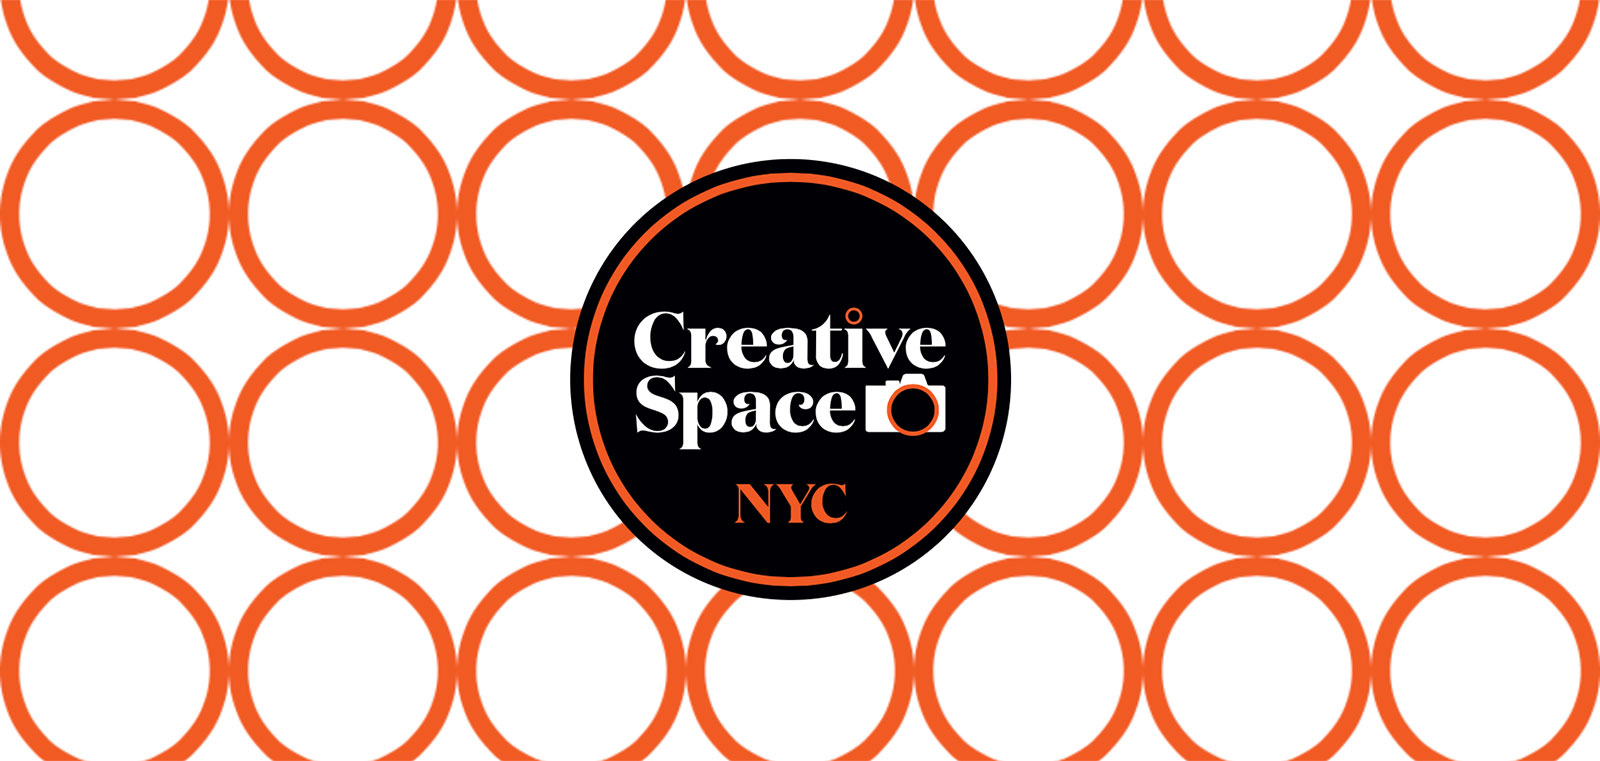 Sony Creative Space NYC